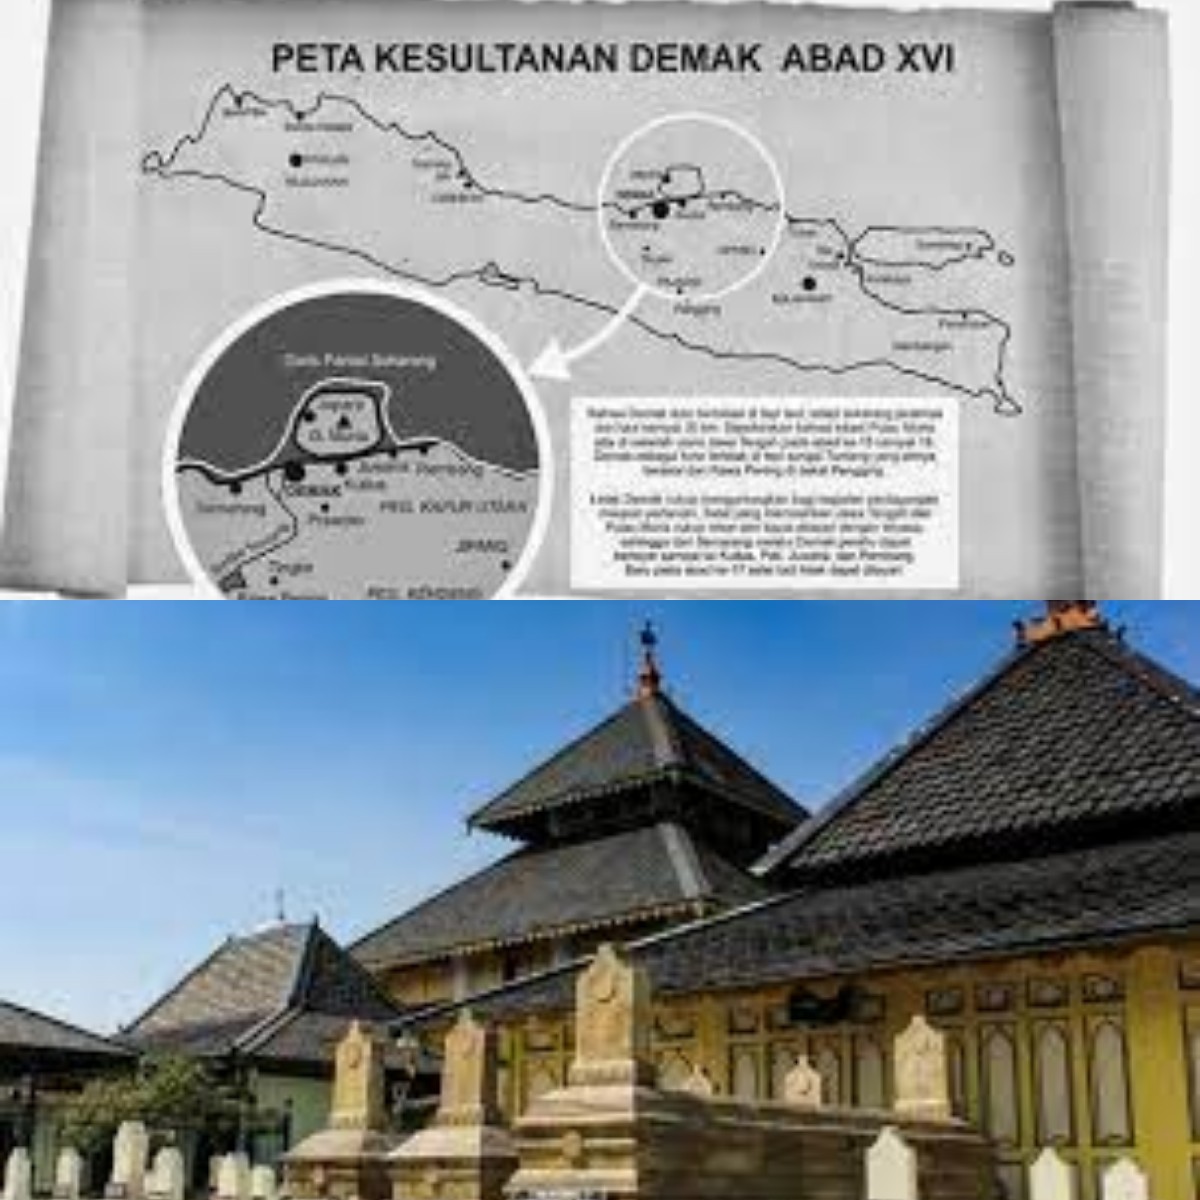 Inilah Sejarah Perjalanan Kesultanan Demak di Pulau Jawa Dalam Menyebarkan Agama Islam 